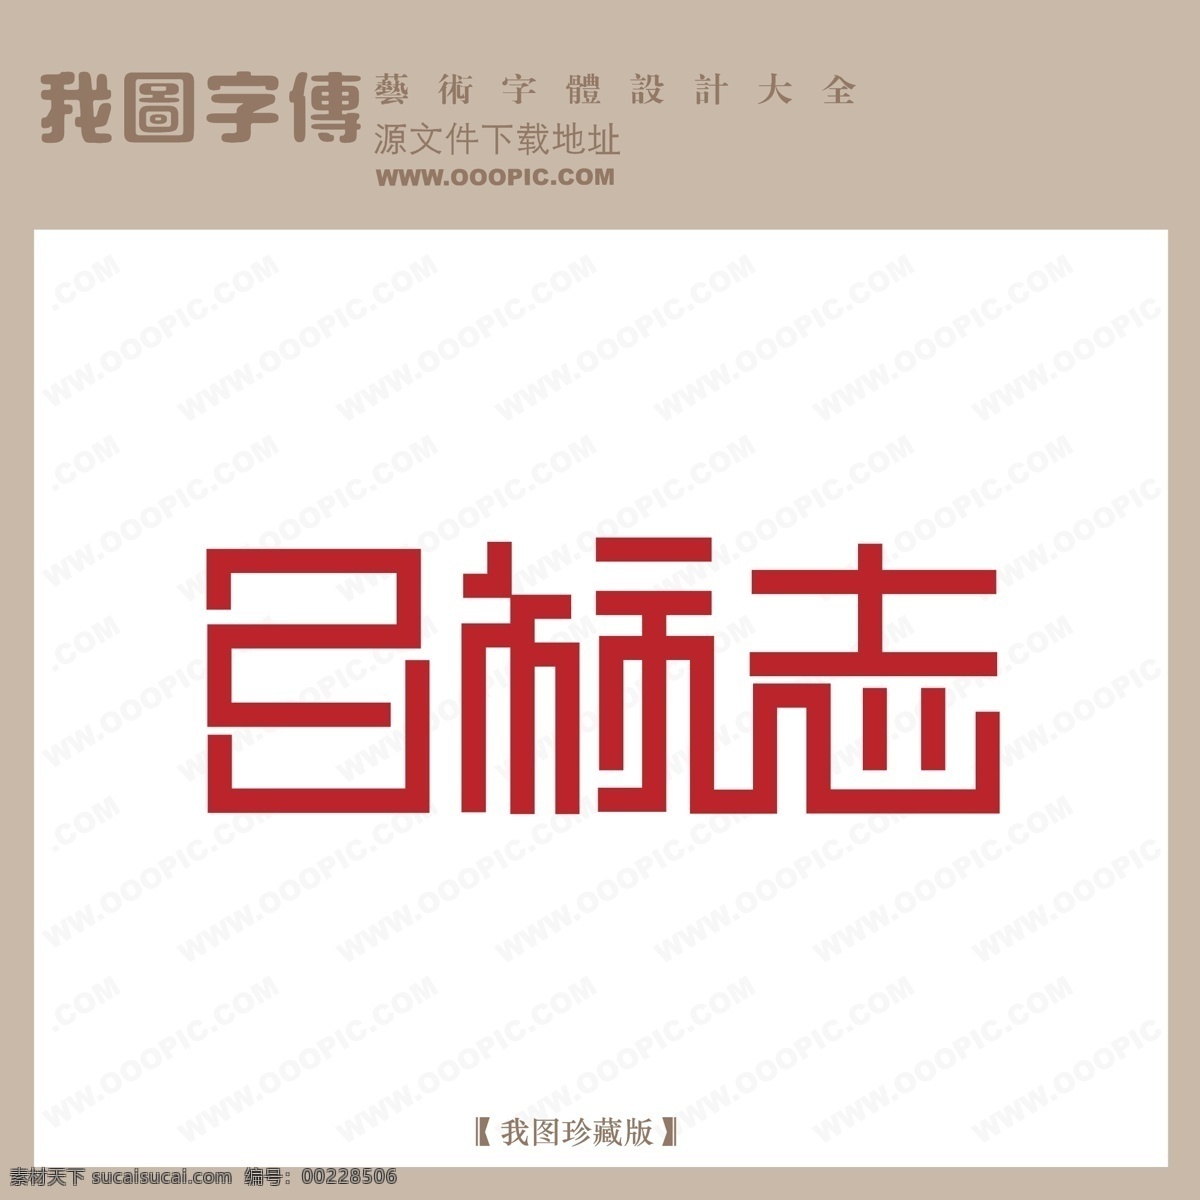 logo 艺术 字 创意艺术字 艺术字 艺术字设计 中文 现代艺术 字体 设计艺术 目标志 矢量图